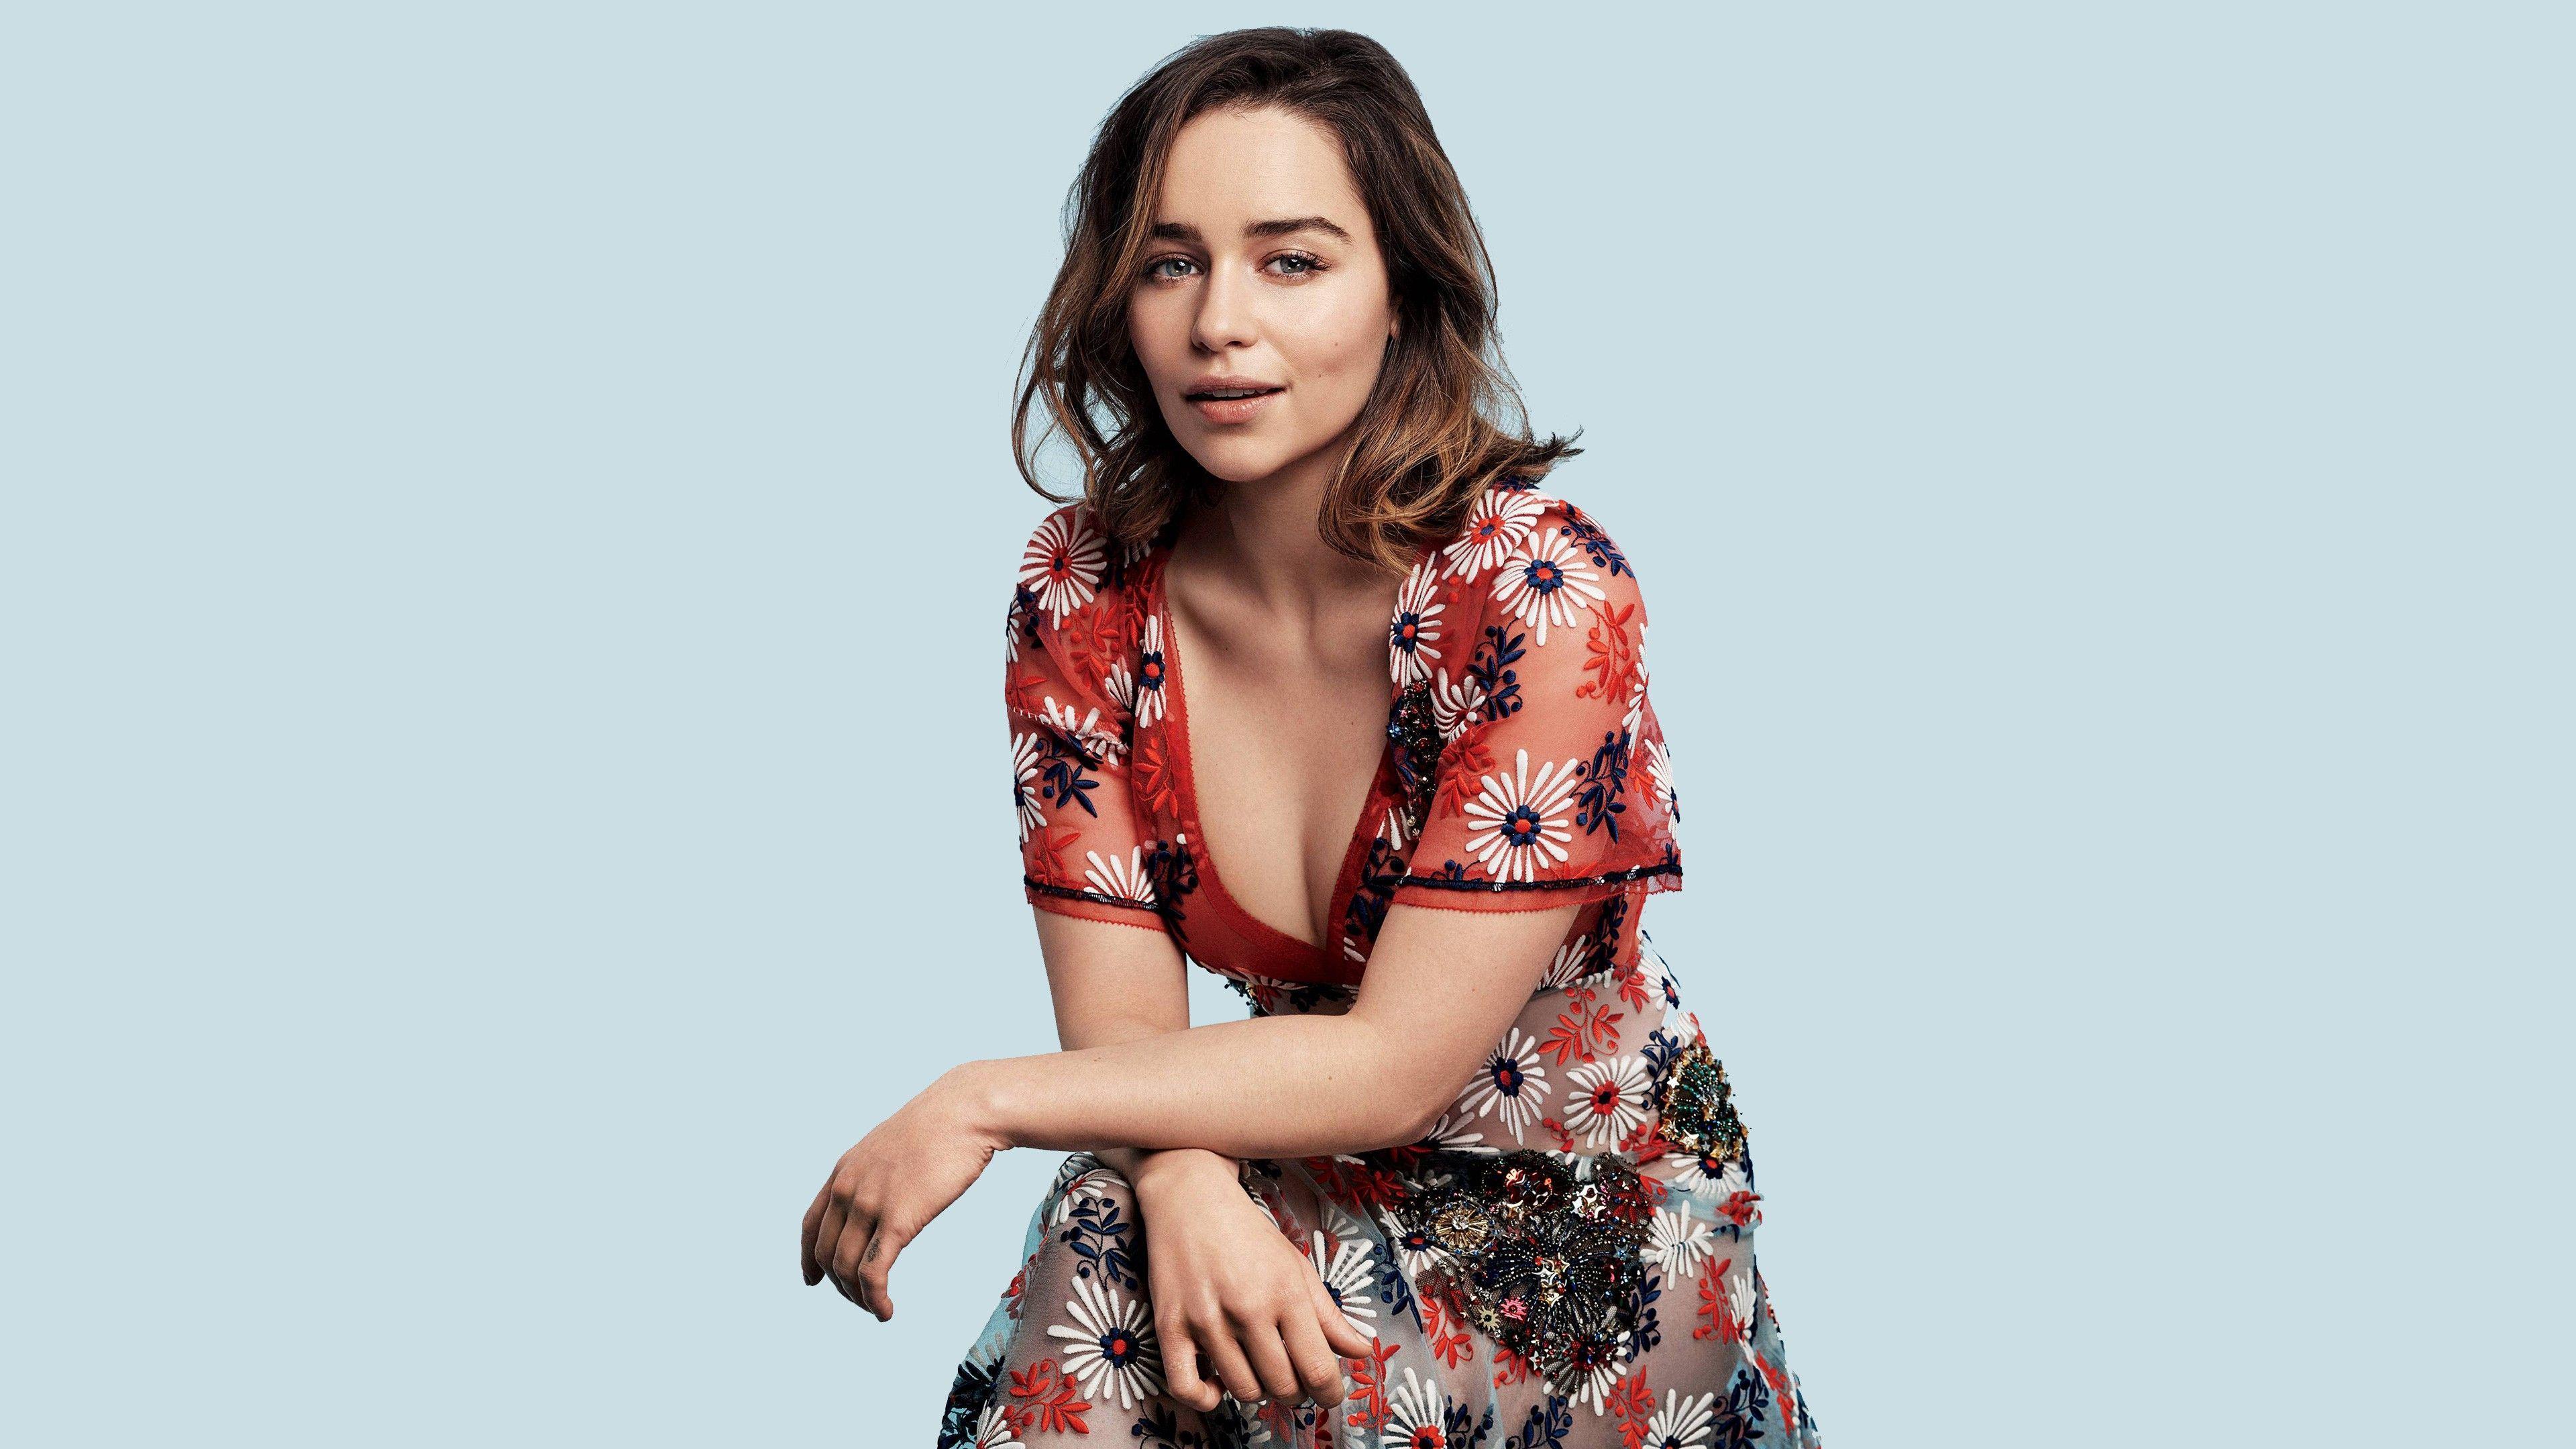 Emilia Clarke Beautiful Photoshoot 2017 Wallpapers